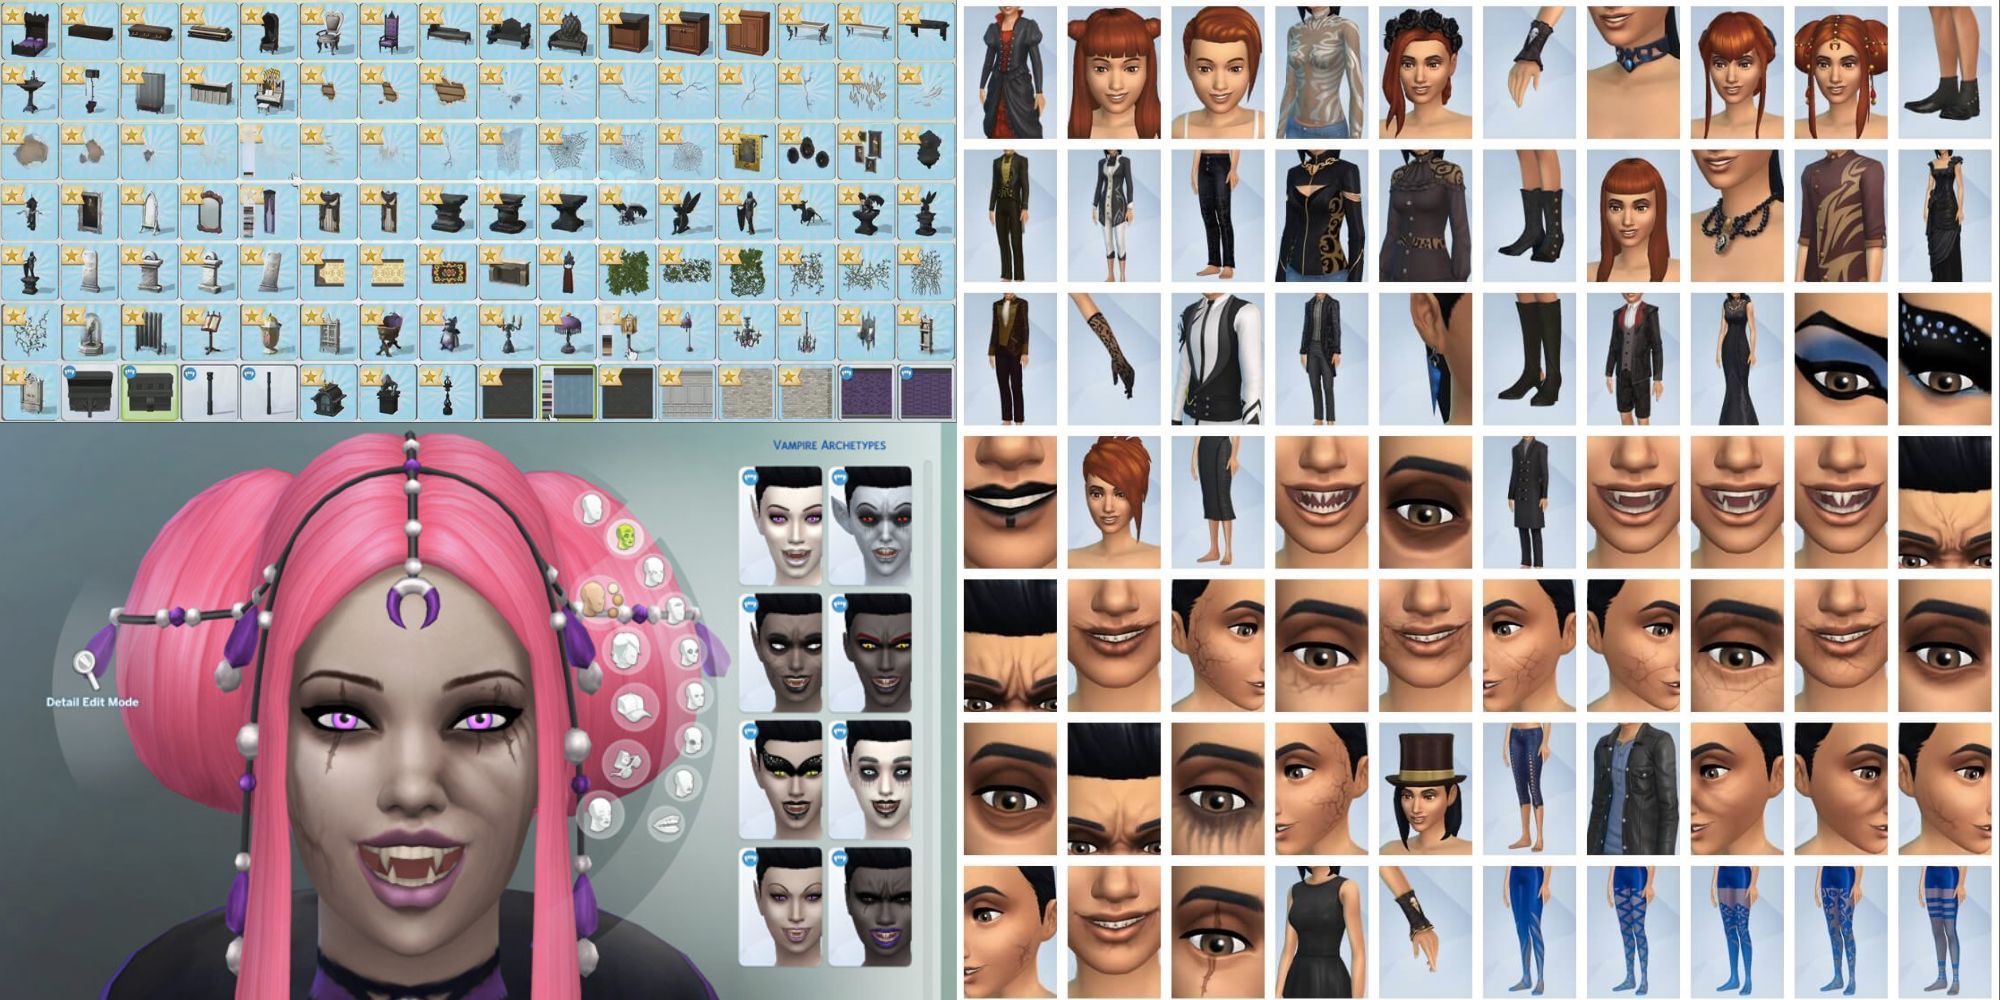 The Sims 4 Vampires CAS Build_Buy Items